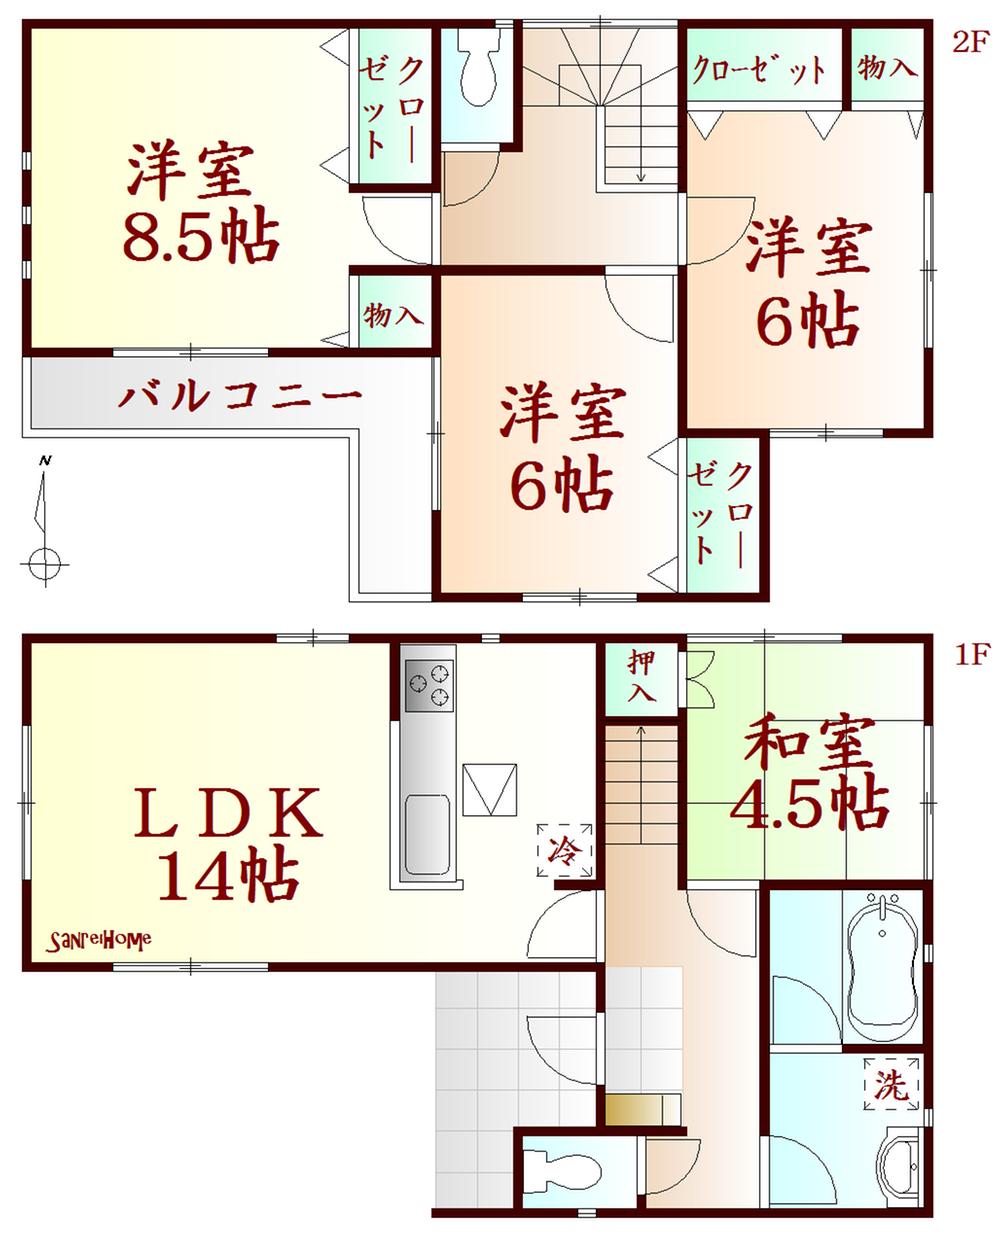 Floor plan. (Building 2), Price 19,800,000 yen, 4LDK, Land area 142.83 sq m , Building area 93.15 sq m